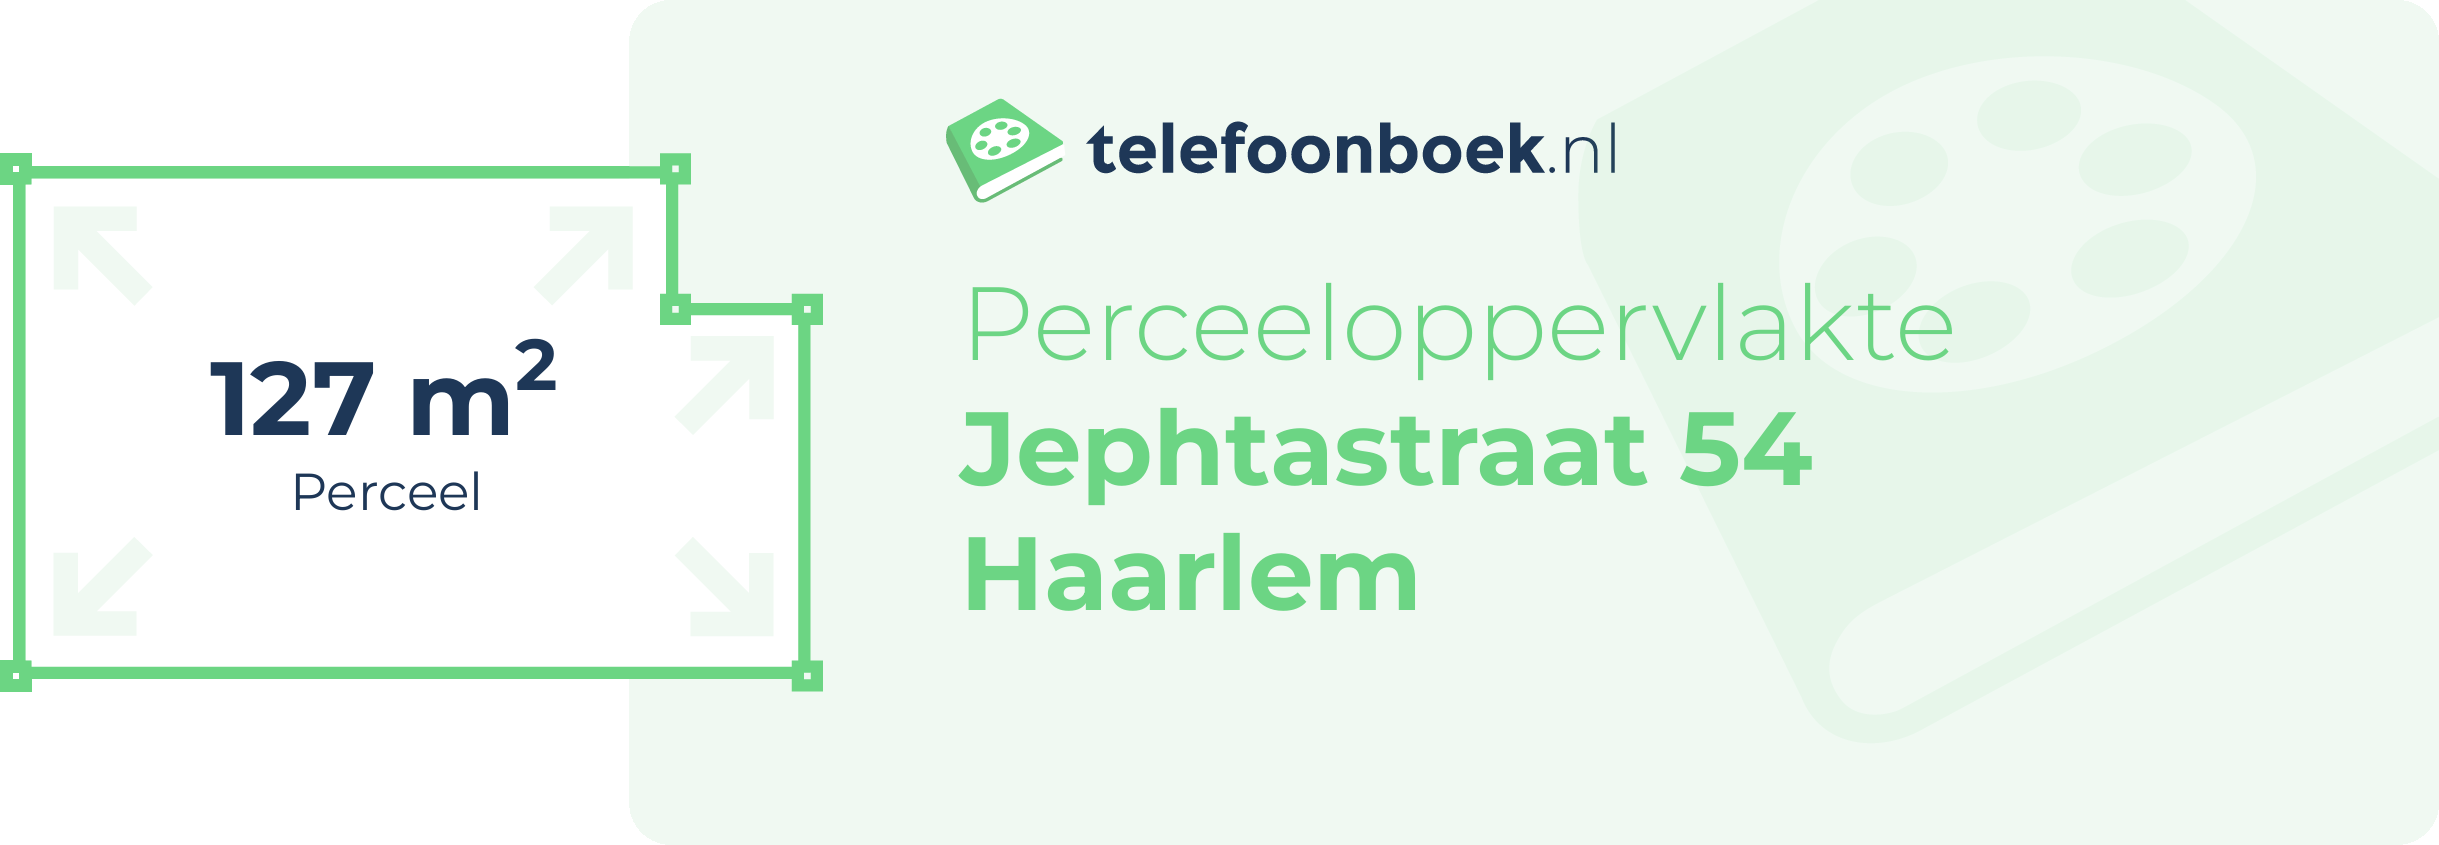 Perceeloppervlakte Jephtastraat 54 Haarlem